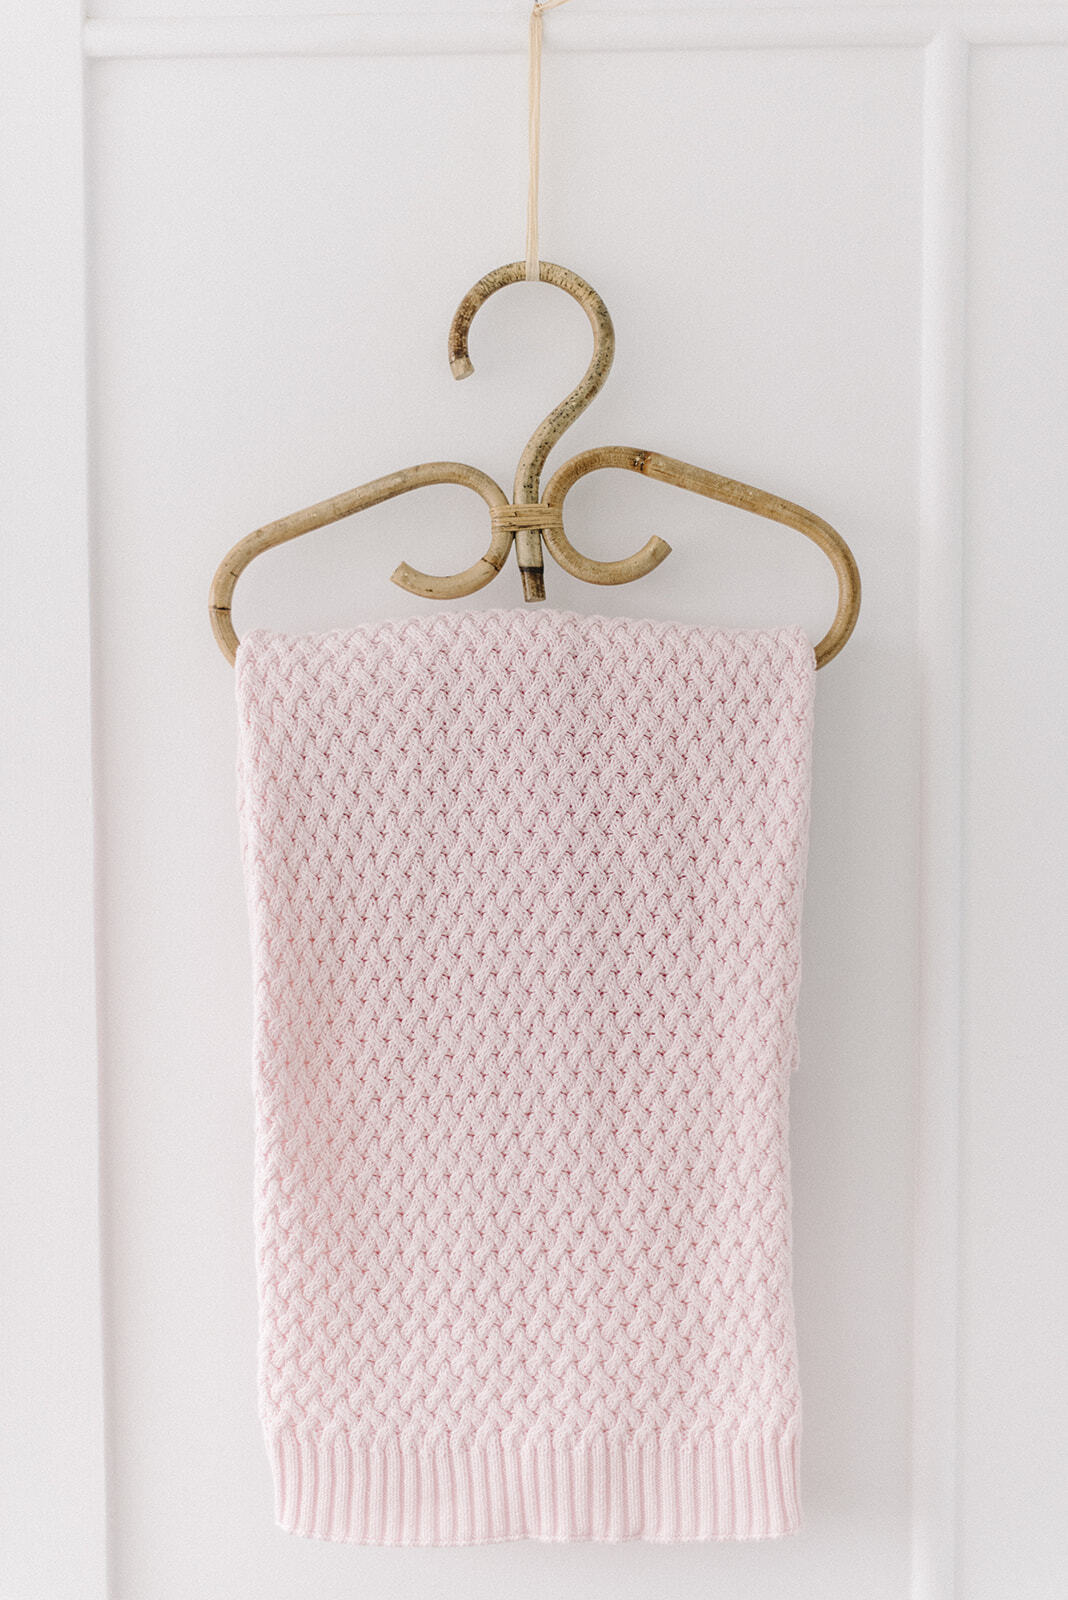 Blush Pink | Diamond Knit Baby Blanket